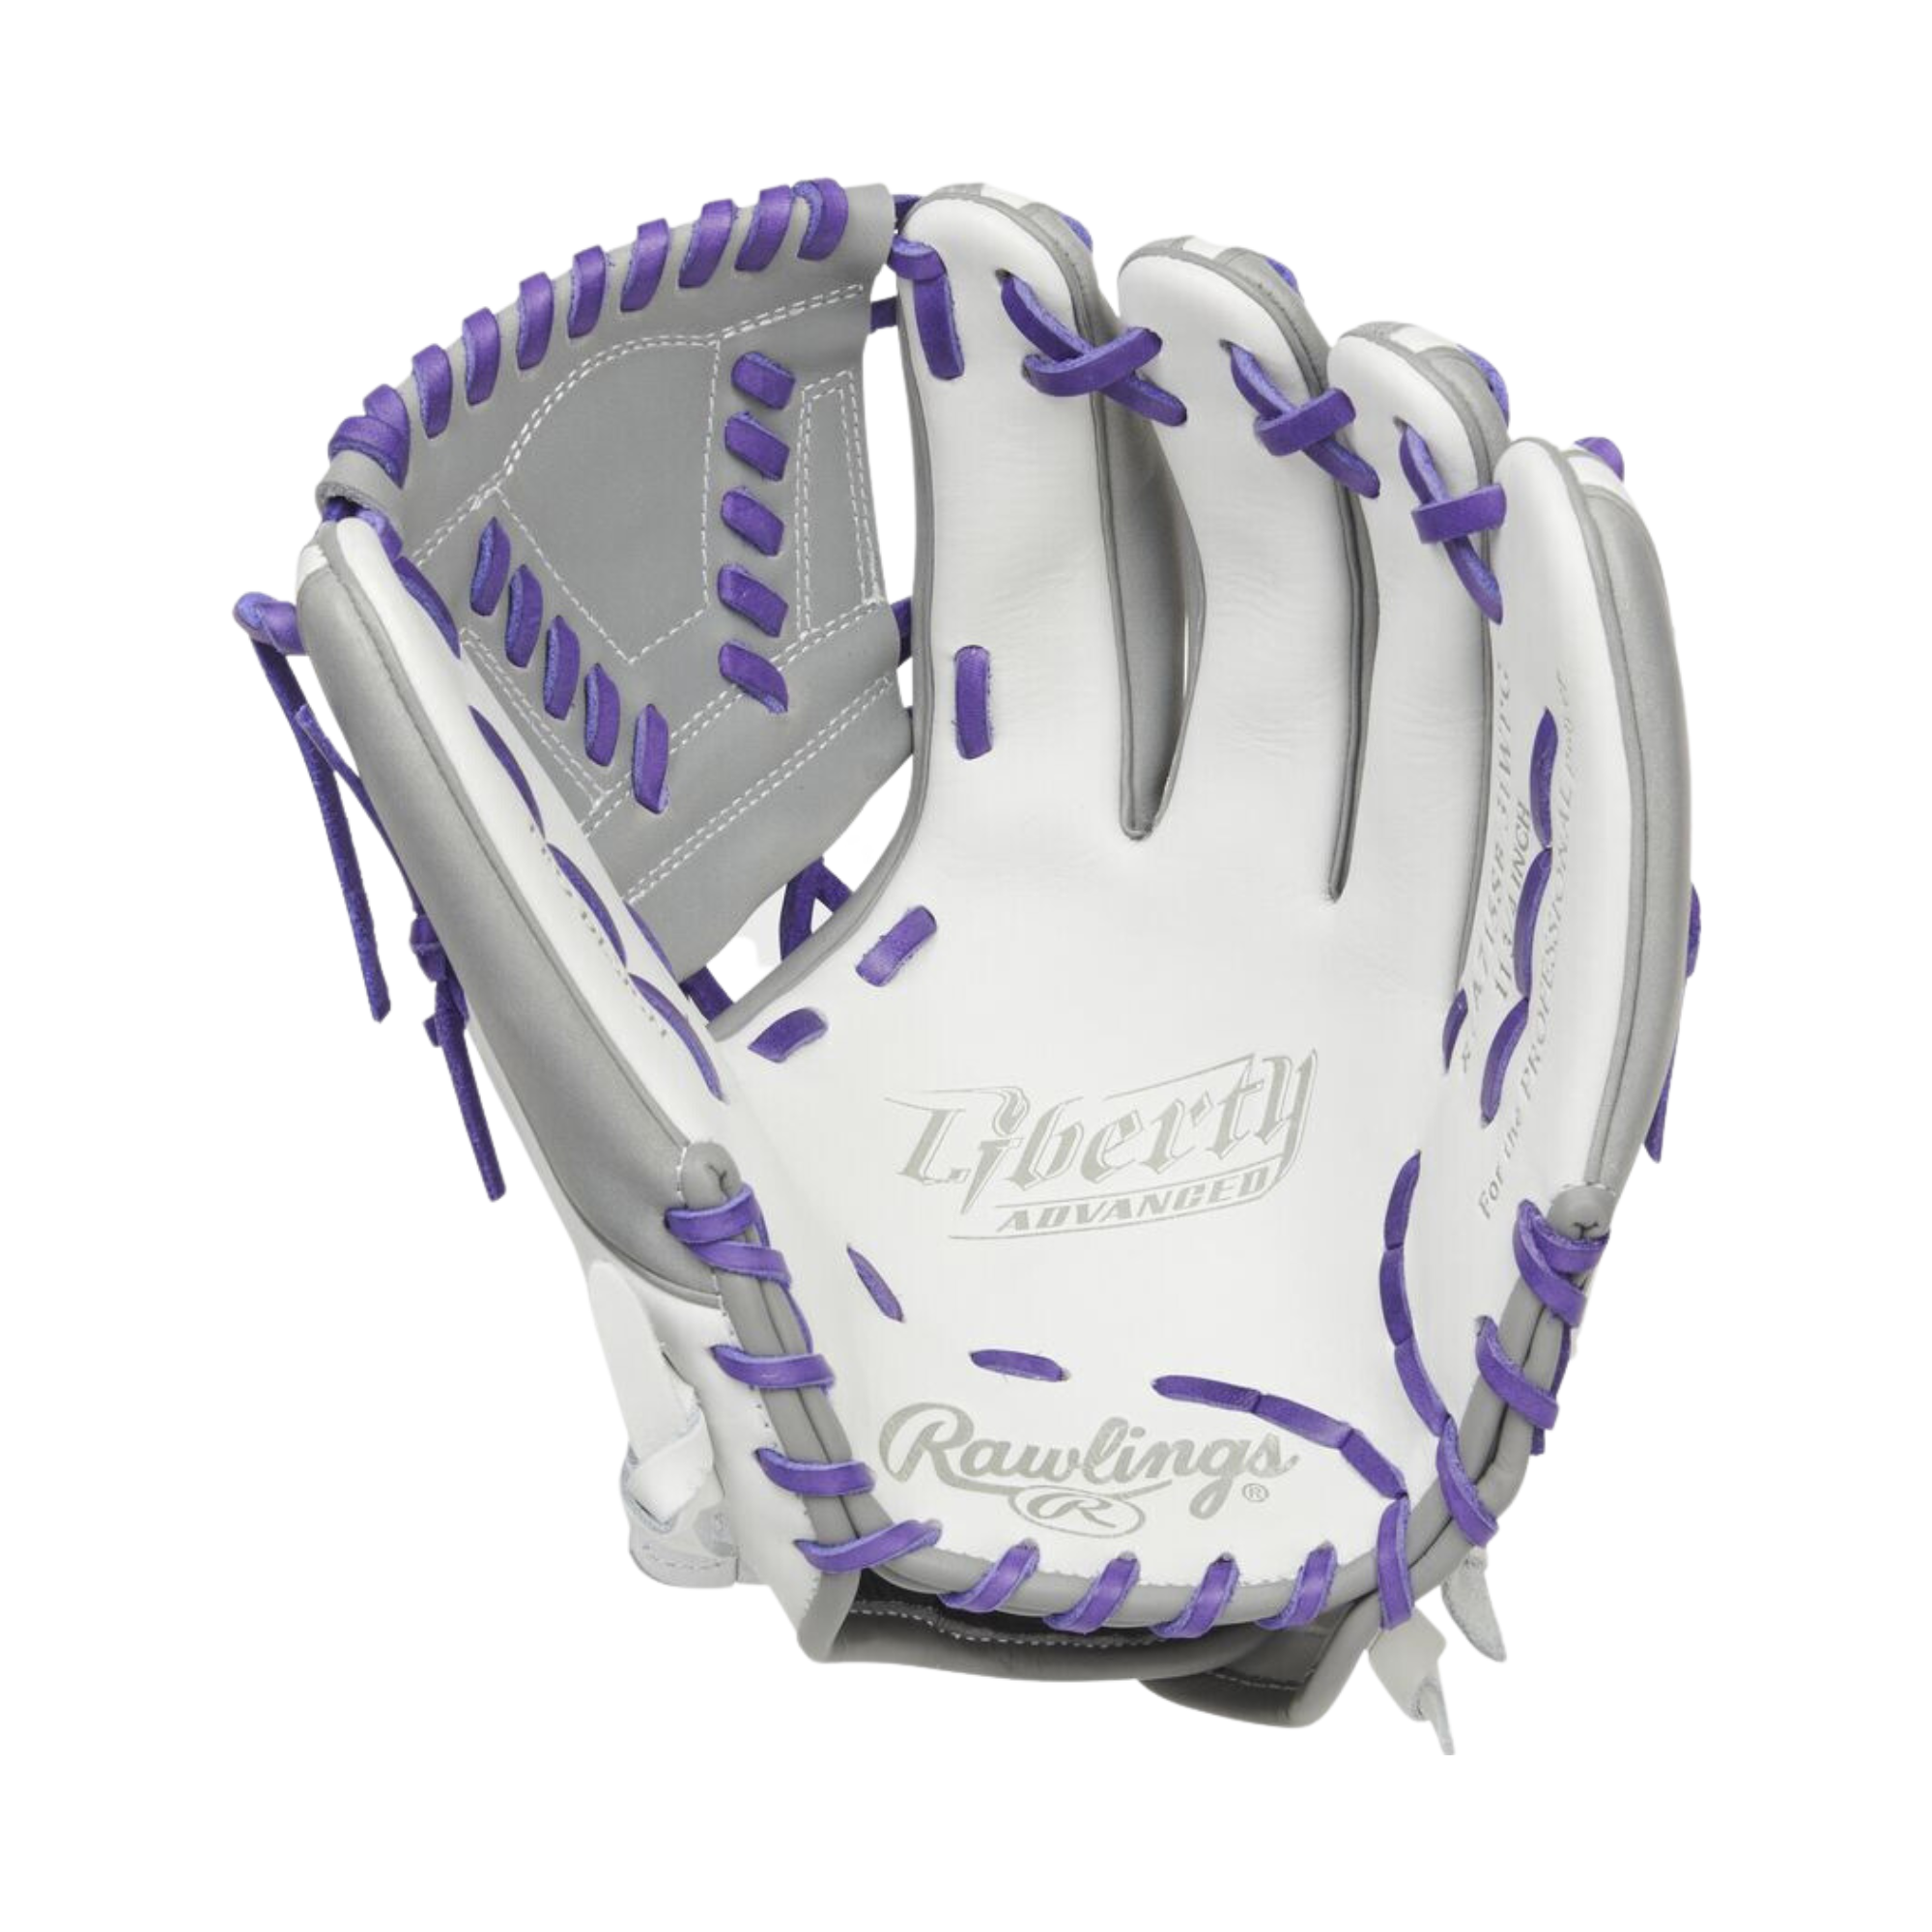 Rawlings Liberty Advanced Color Series Infield Glove 11.75-inch  Purple